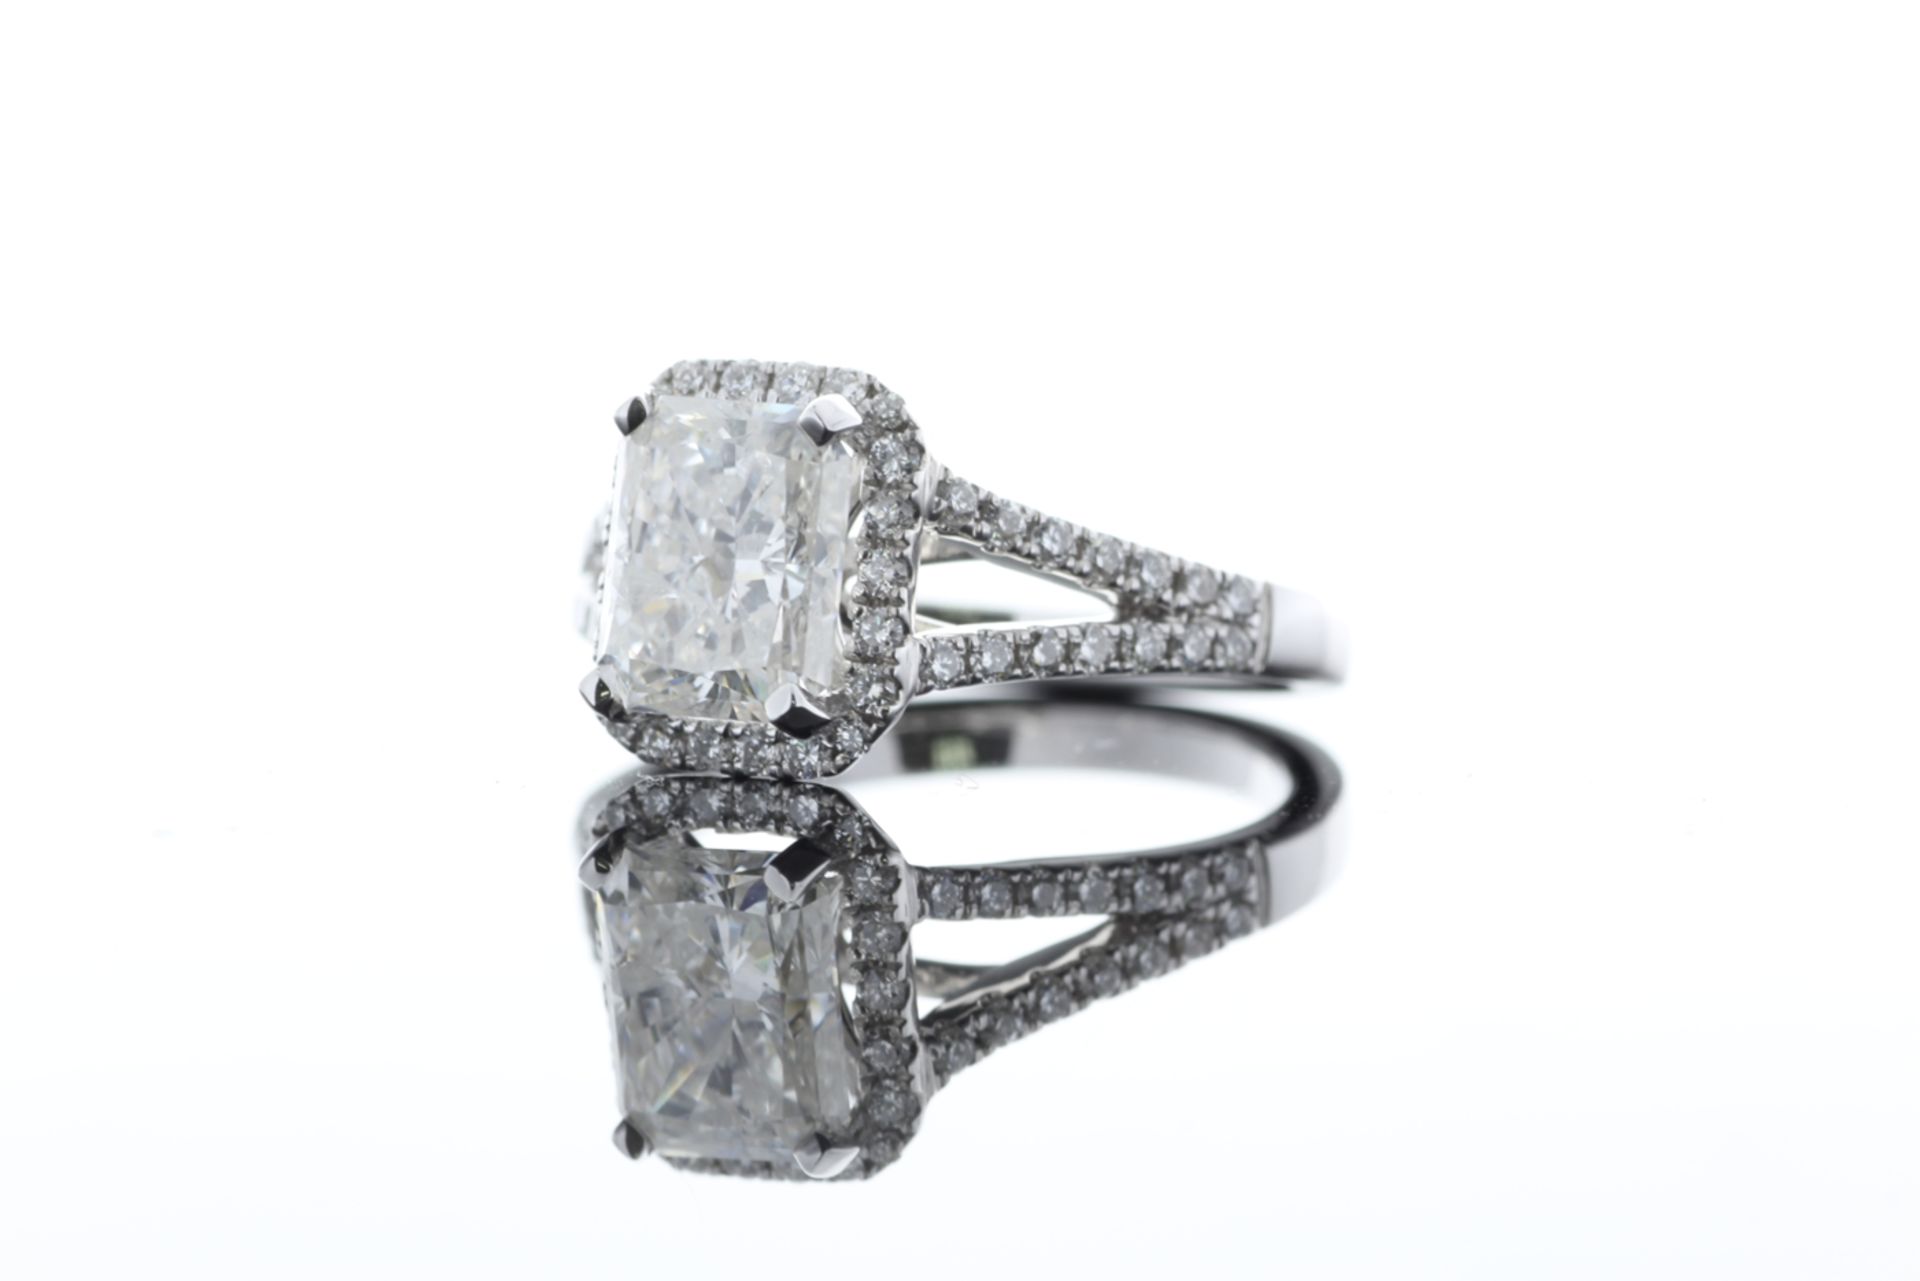 18ct White Gold Single Stone Radiant Cut Diamond With Halo Setting Ring 2.51 (2.01) - Image 8 of 73